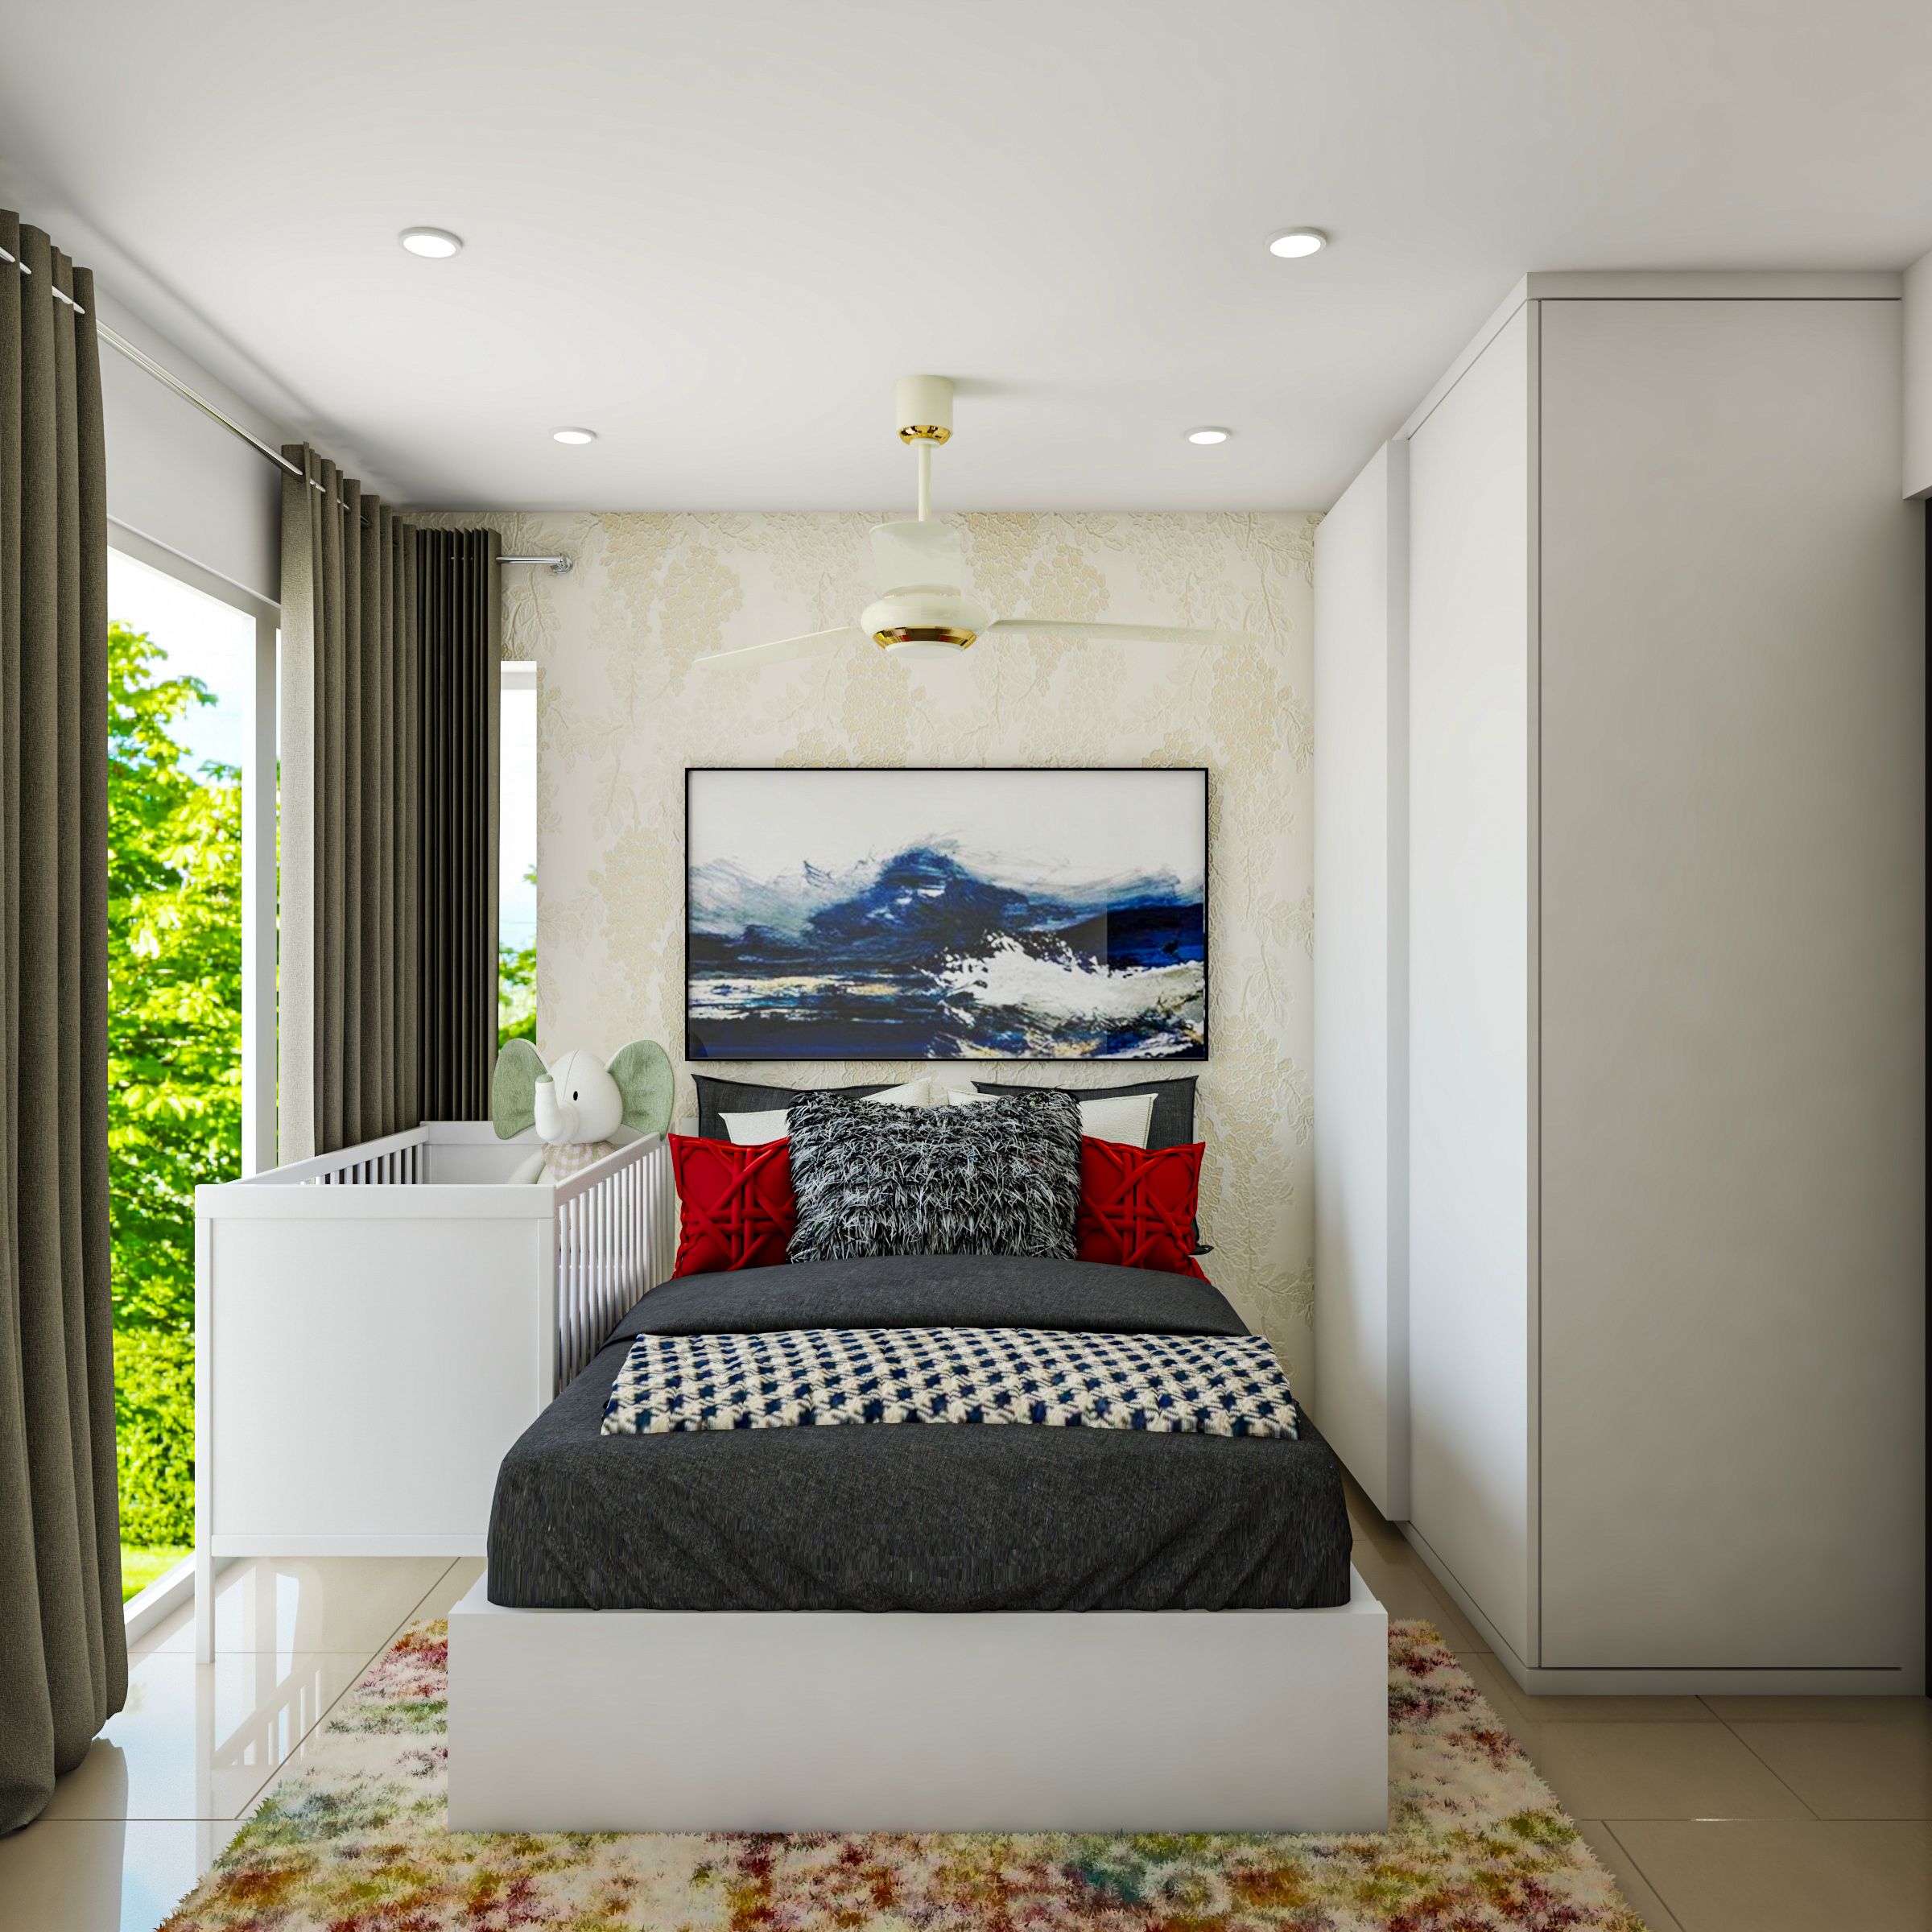 Modern Master Bedroom Design With Sliding Wardrobe And Crib